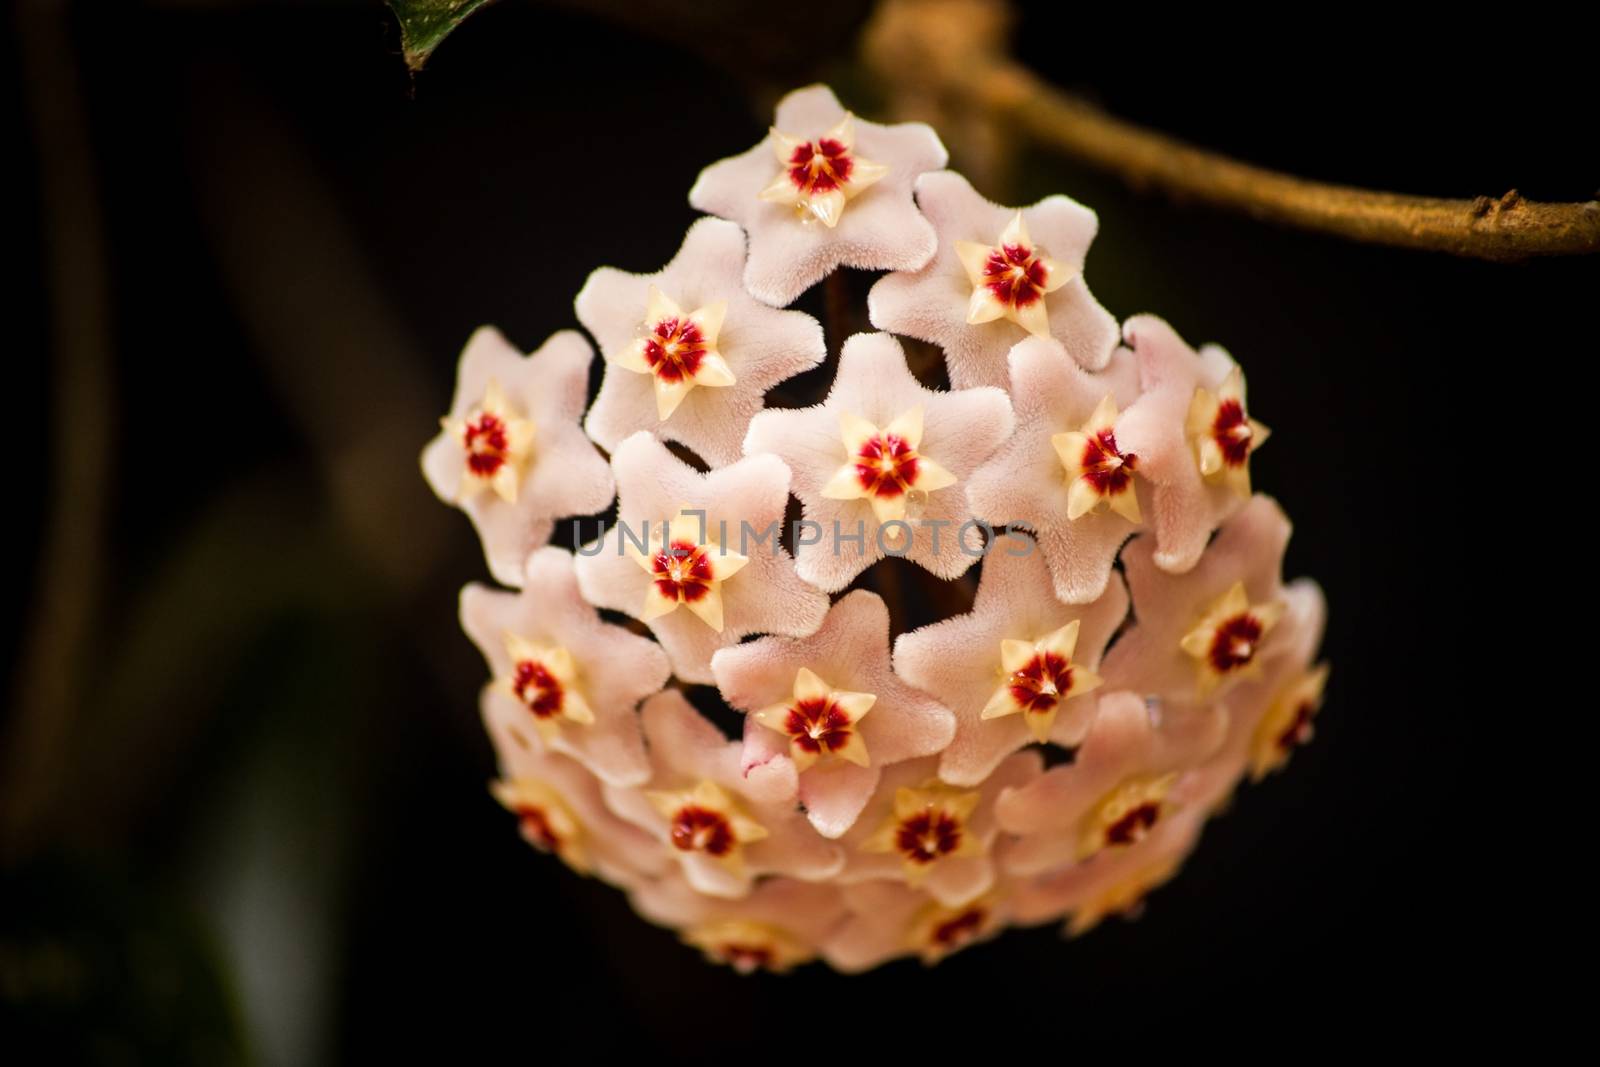 Hoya Waxplant Flower 2 by kobus_peche